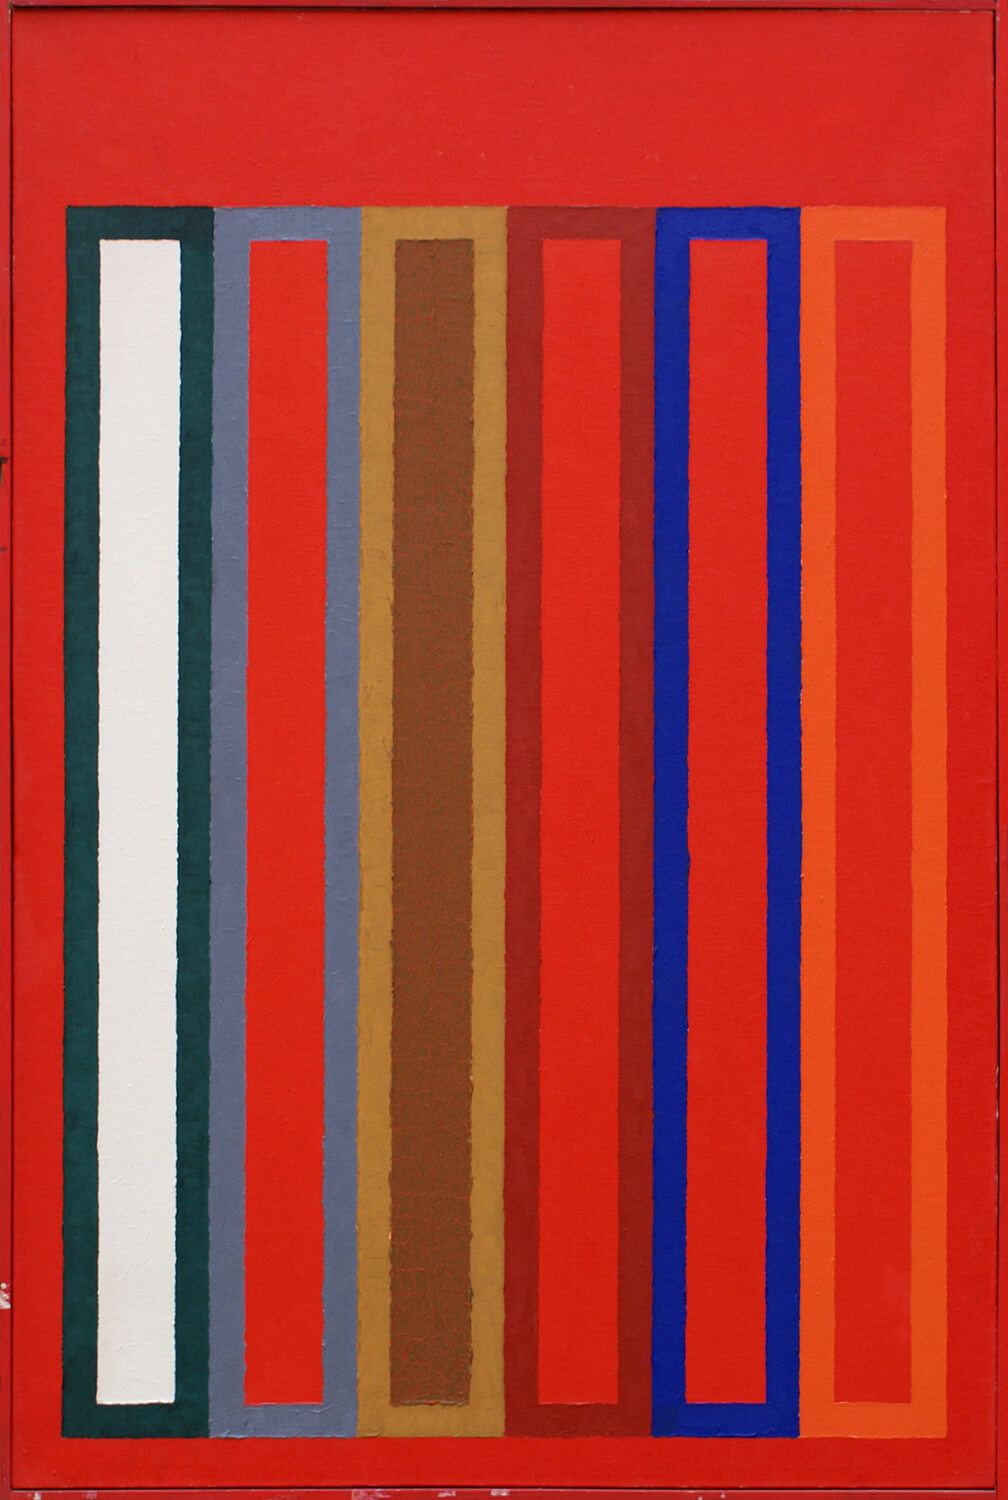 Peter Benkert, Untitled, No. 5, 1977, acrylic on canvas, 90 x 60 cm